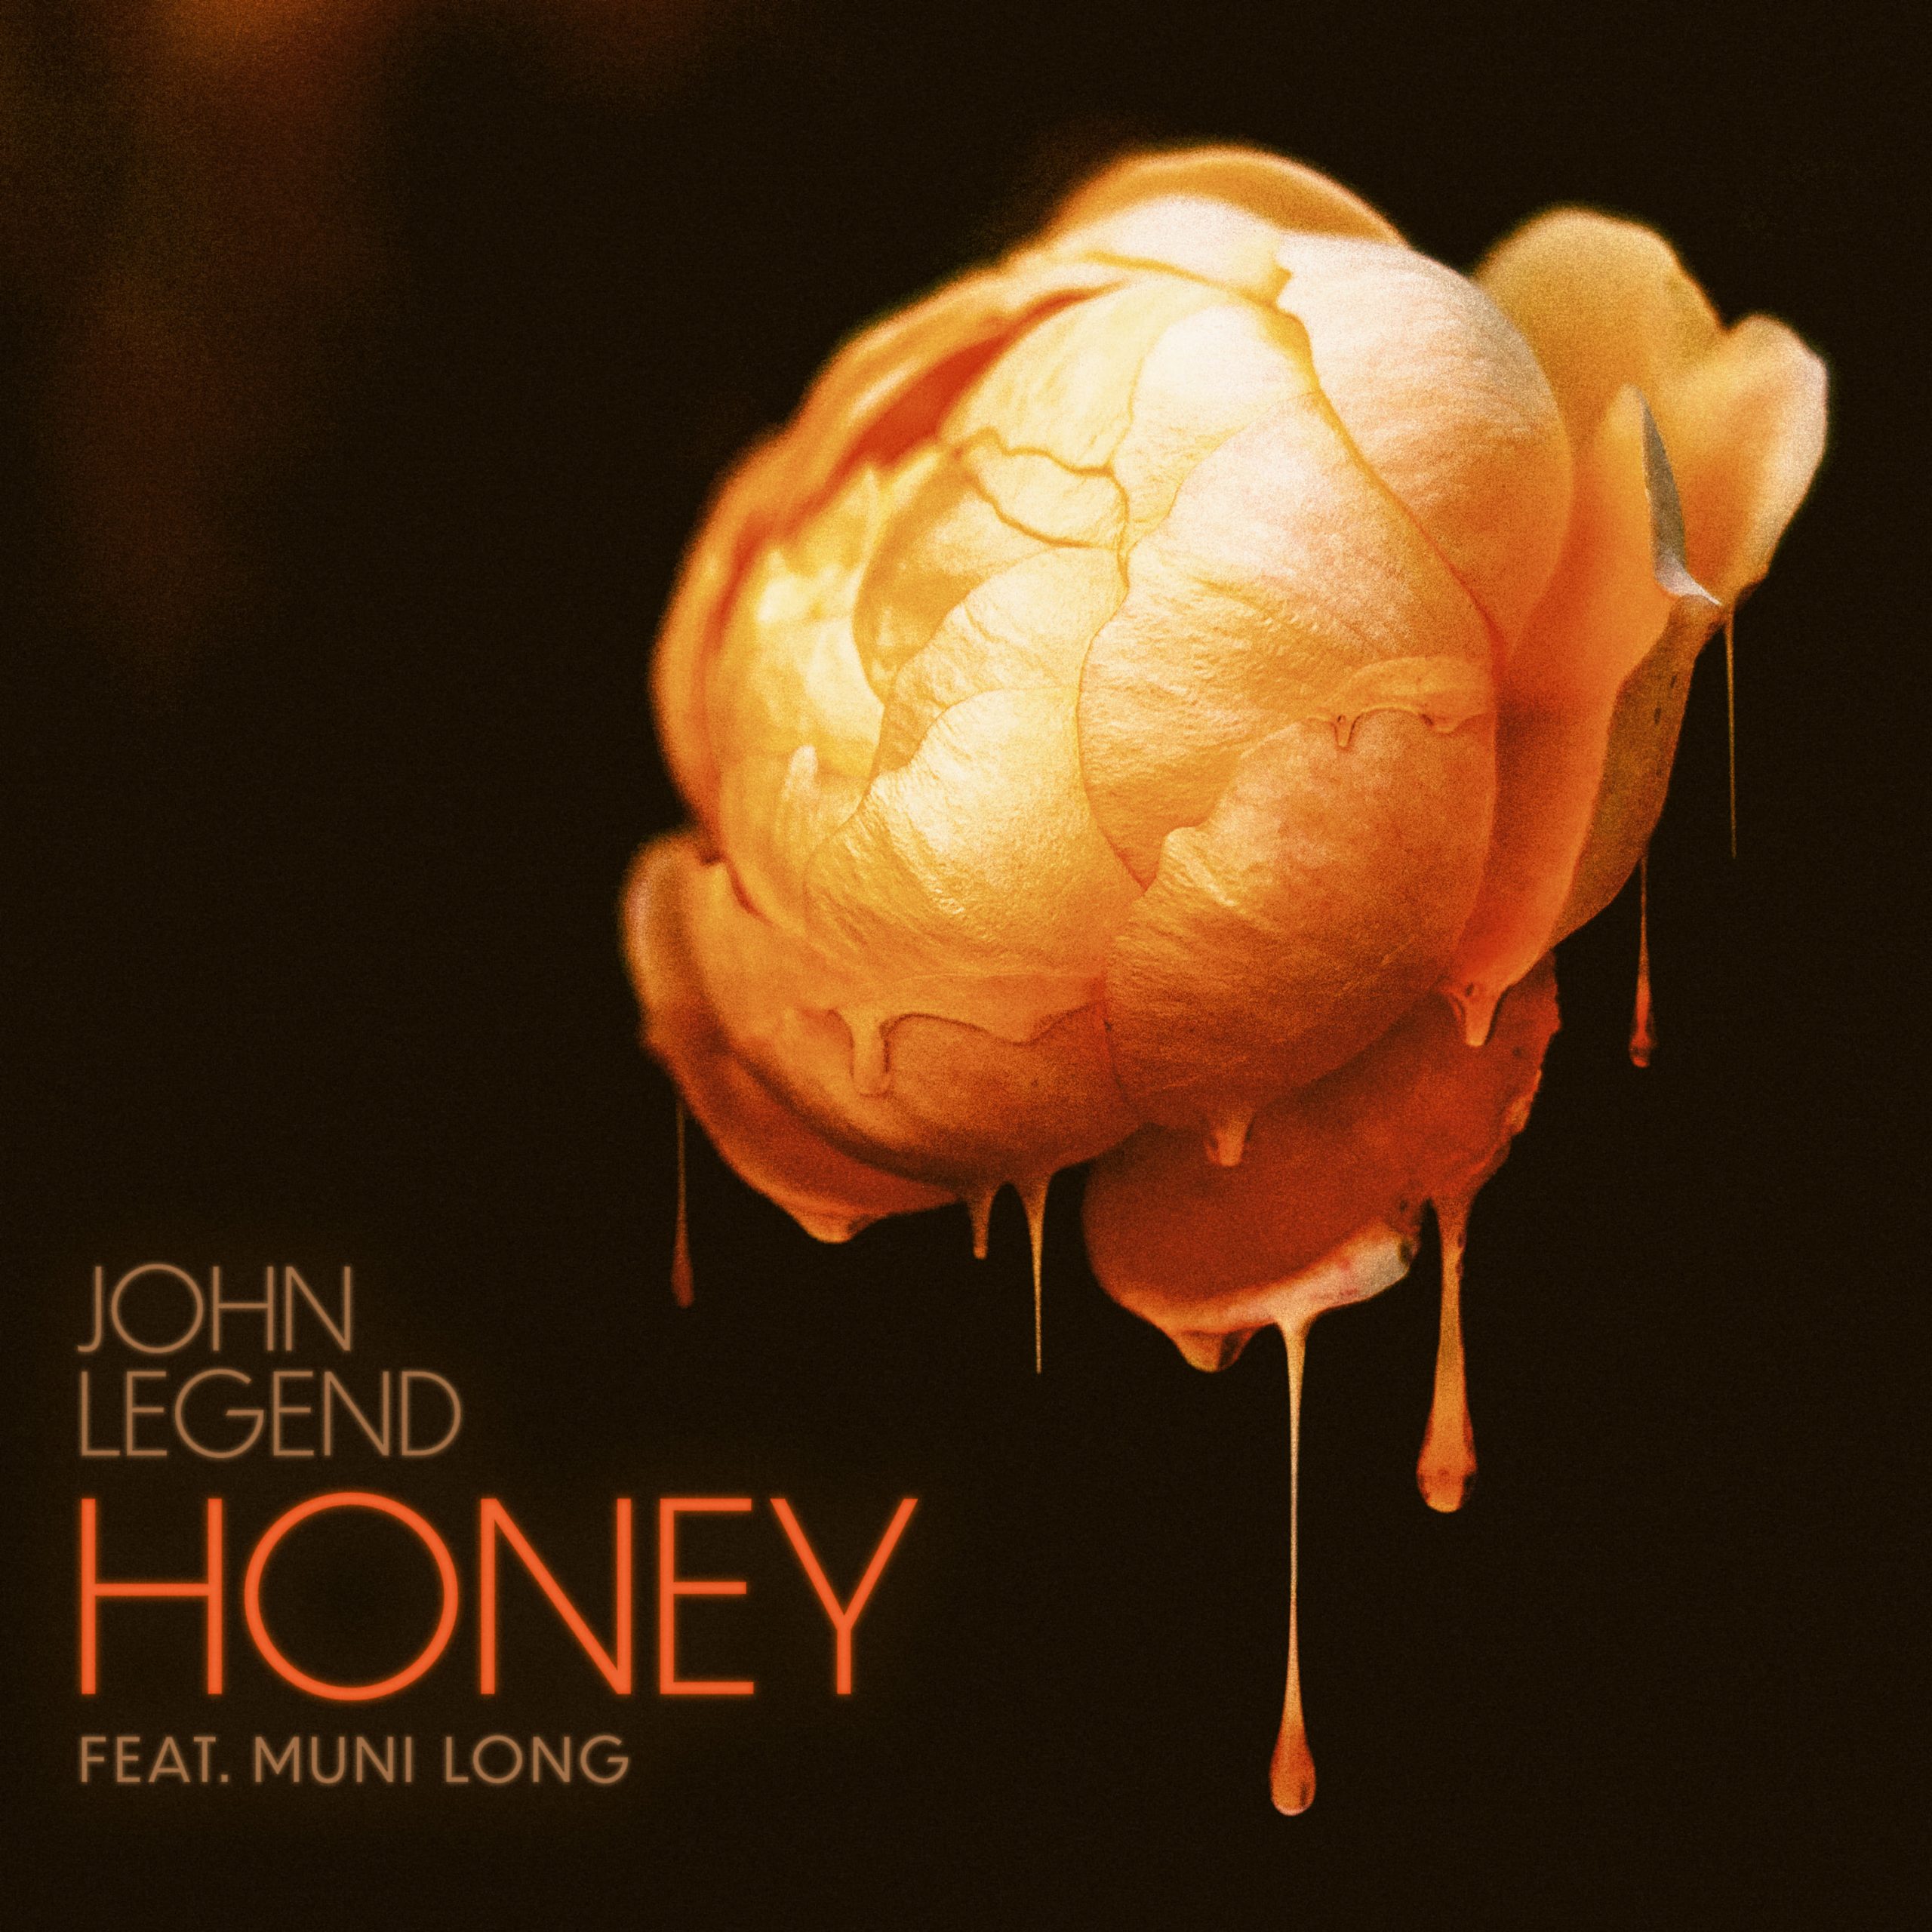 John Legend & Muni Long HONEY 9 01 (cc Eric Williams)